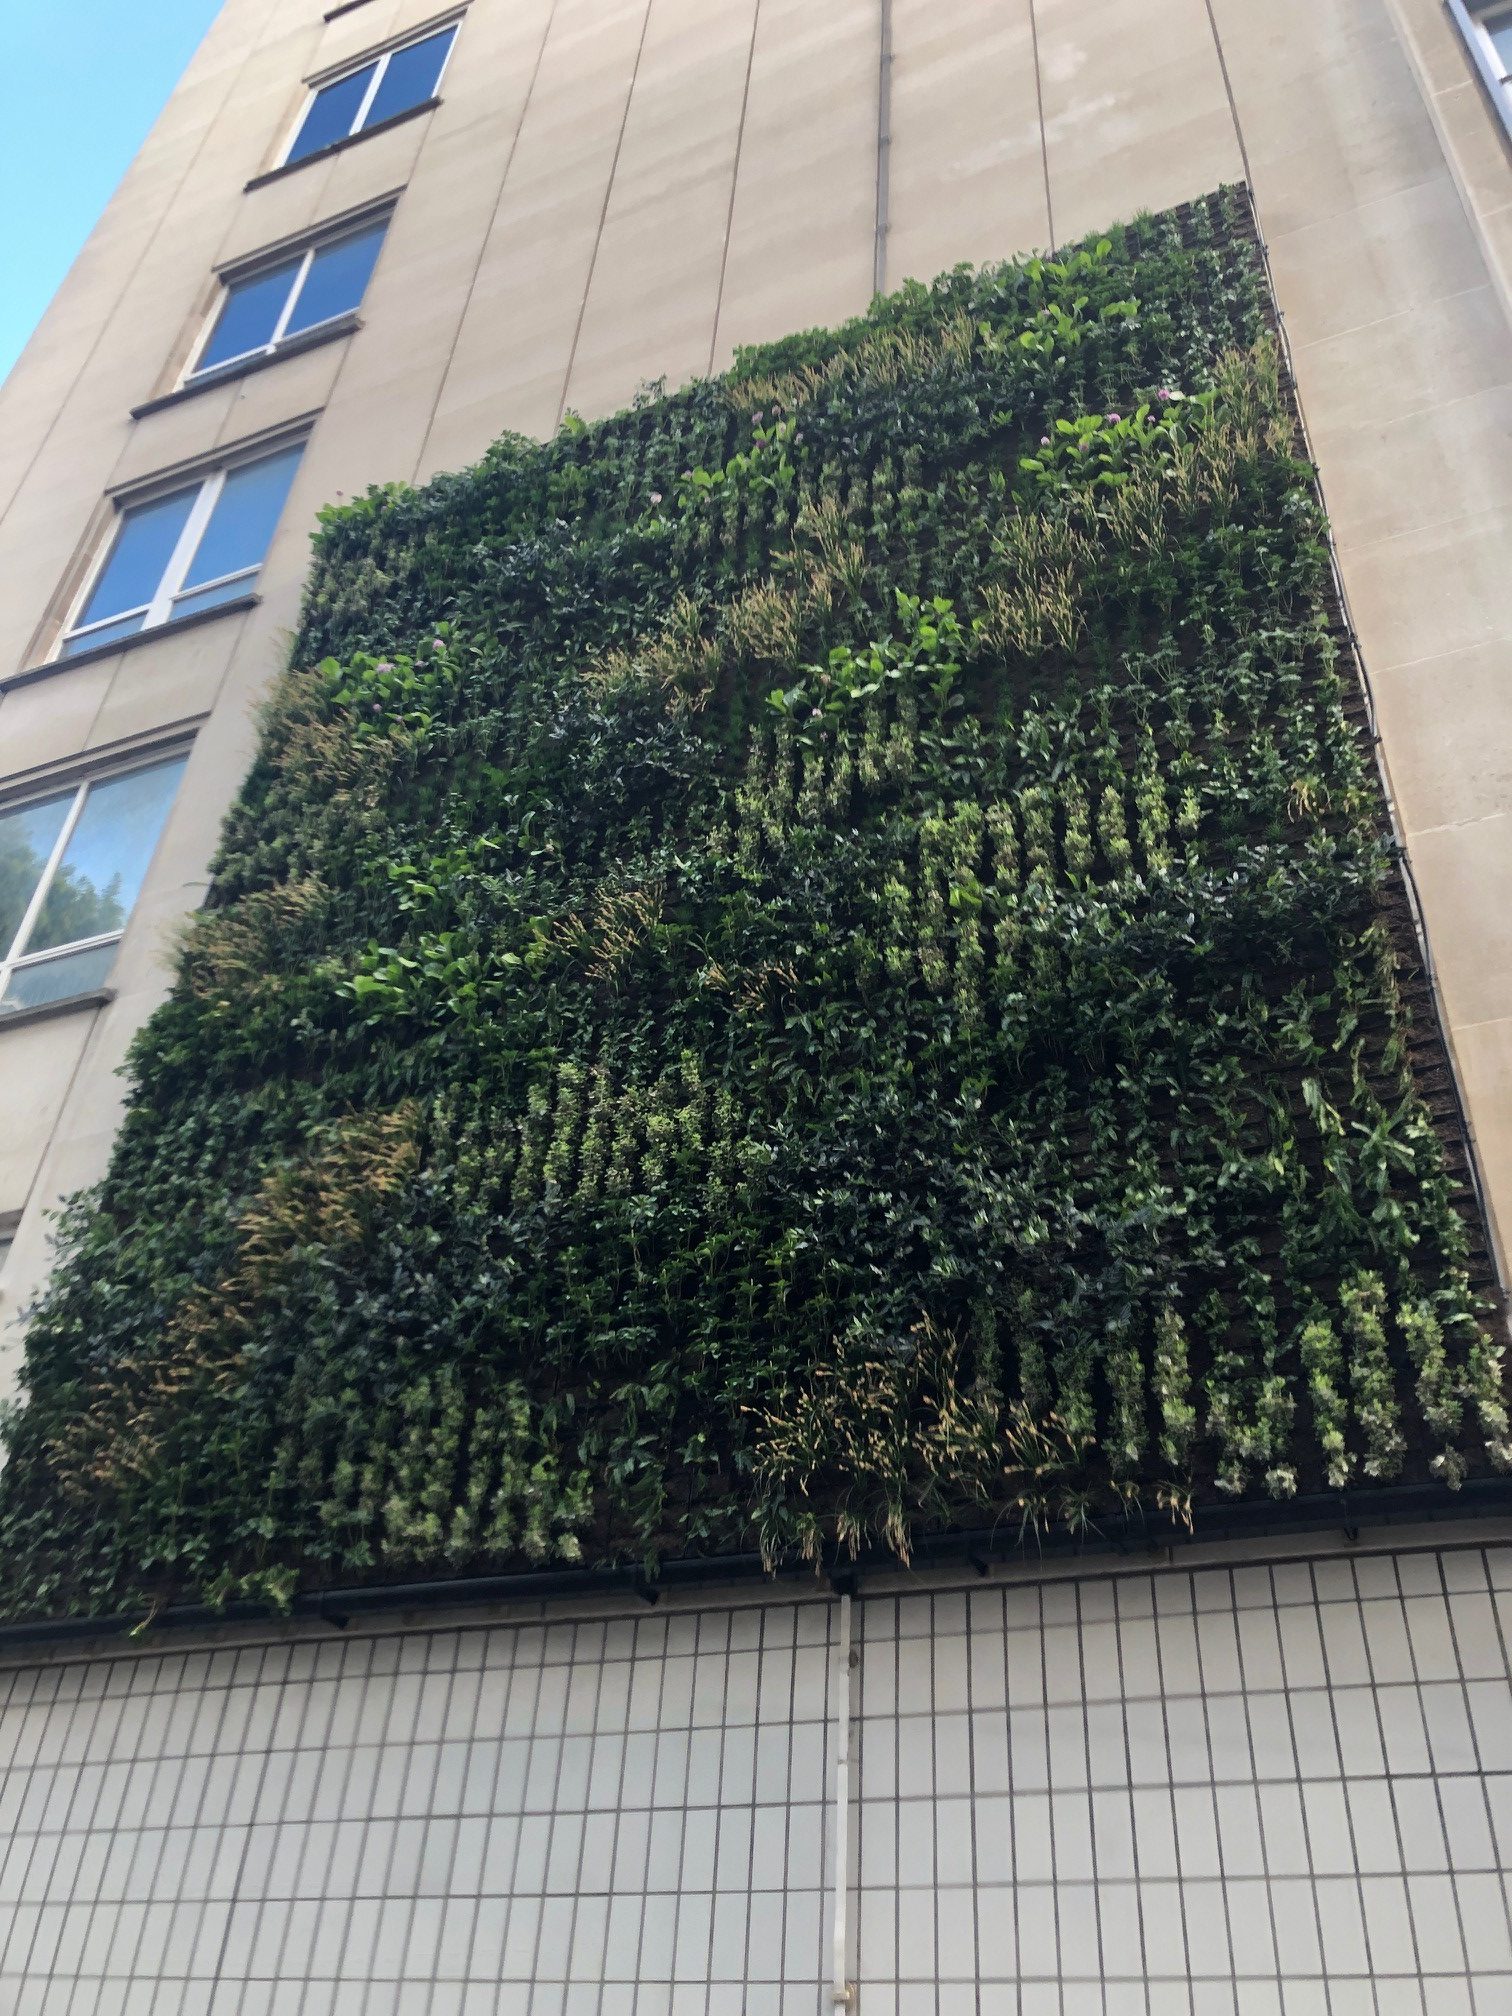 London james streek green wall rotated